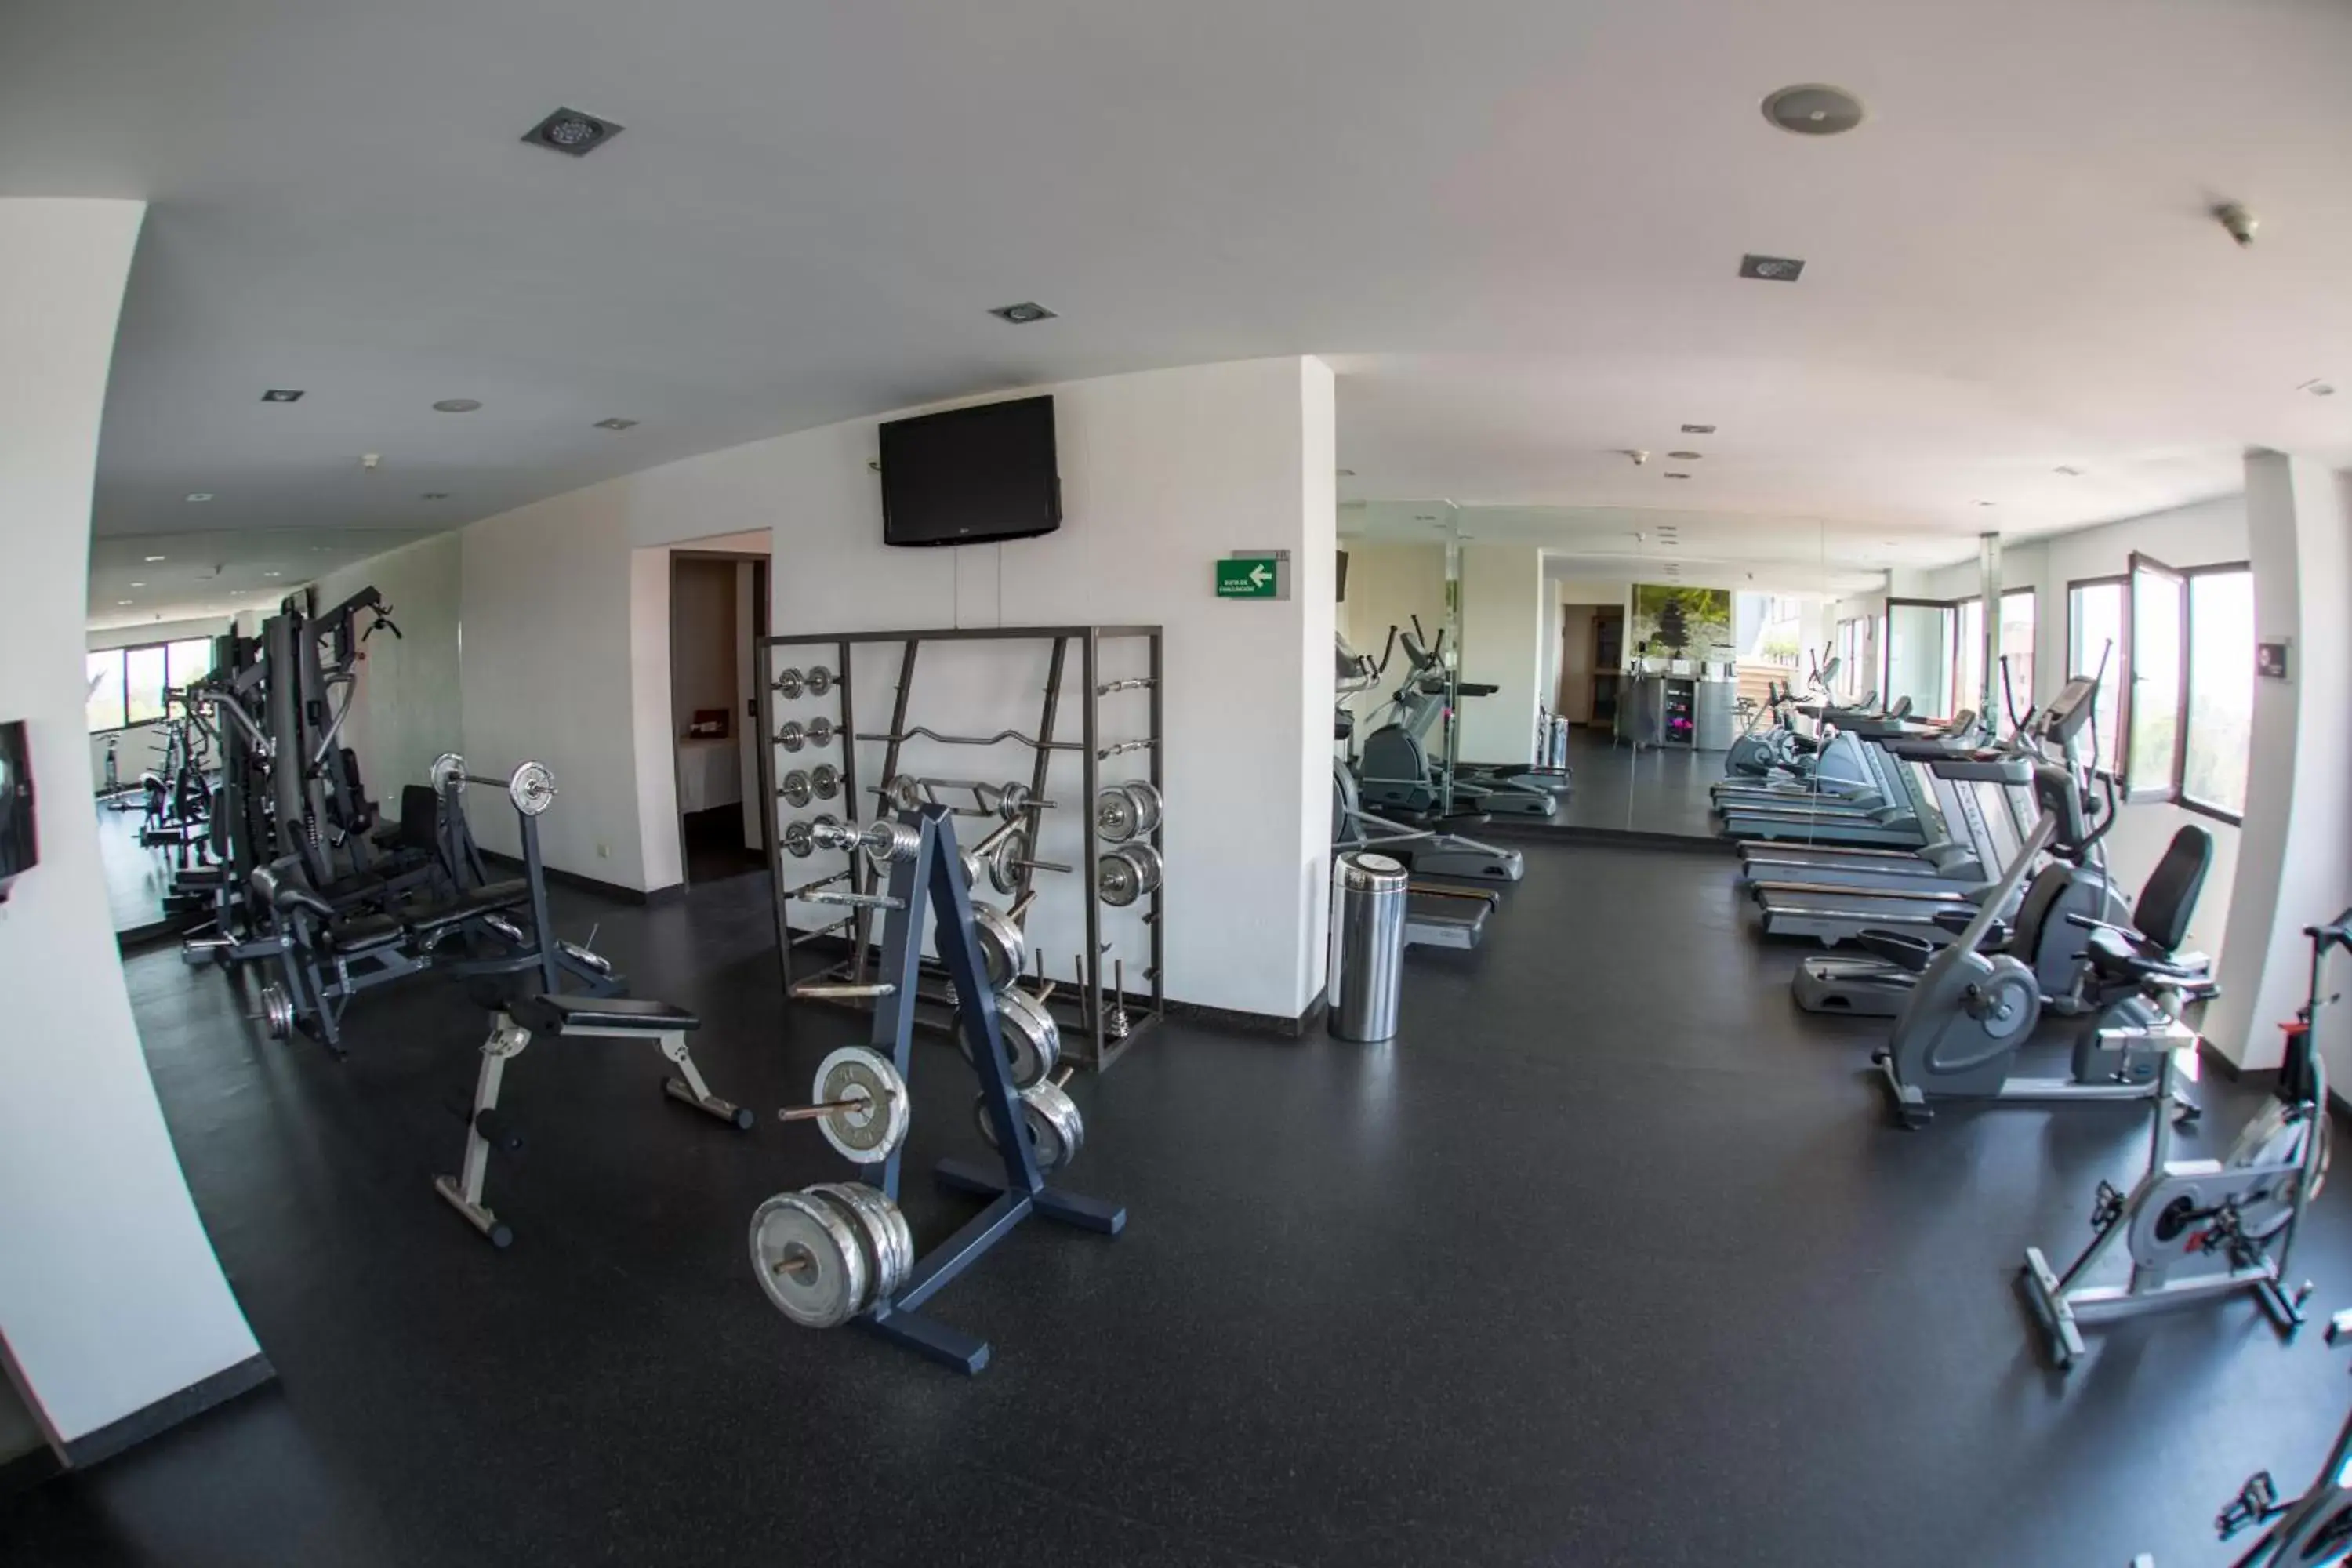 Fitness centre/facilities, Fitness Center/Facilities in Hotel Riazor Aeropuerto